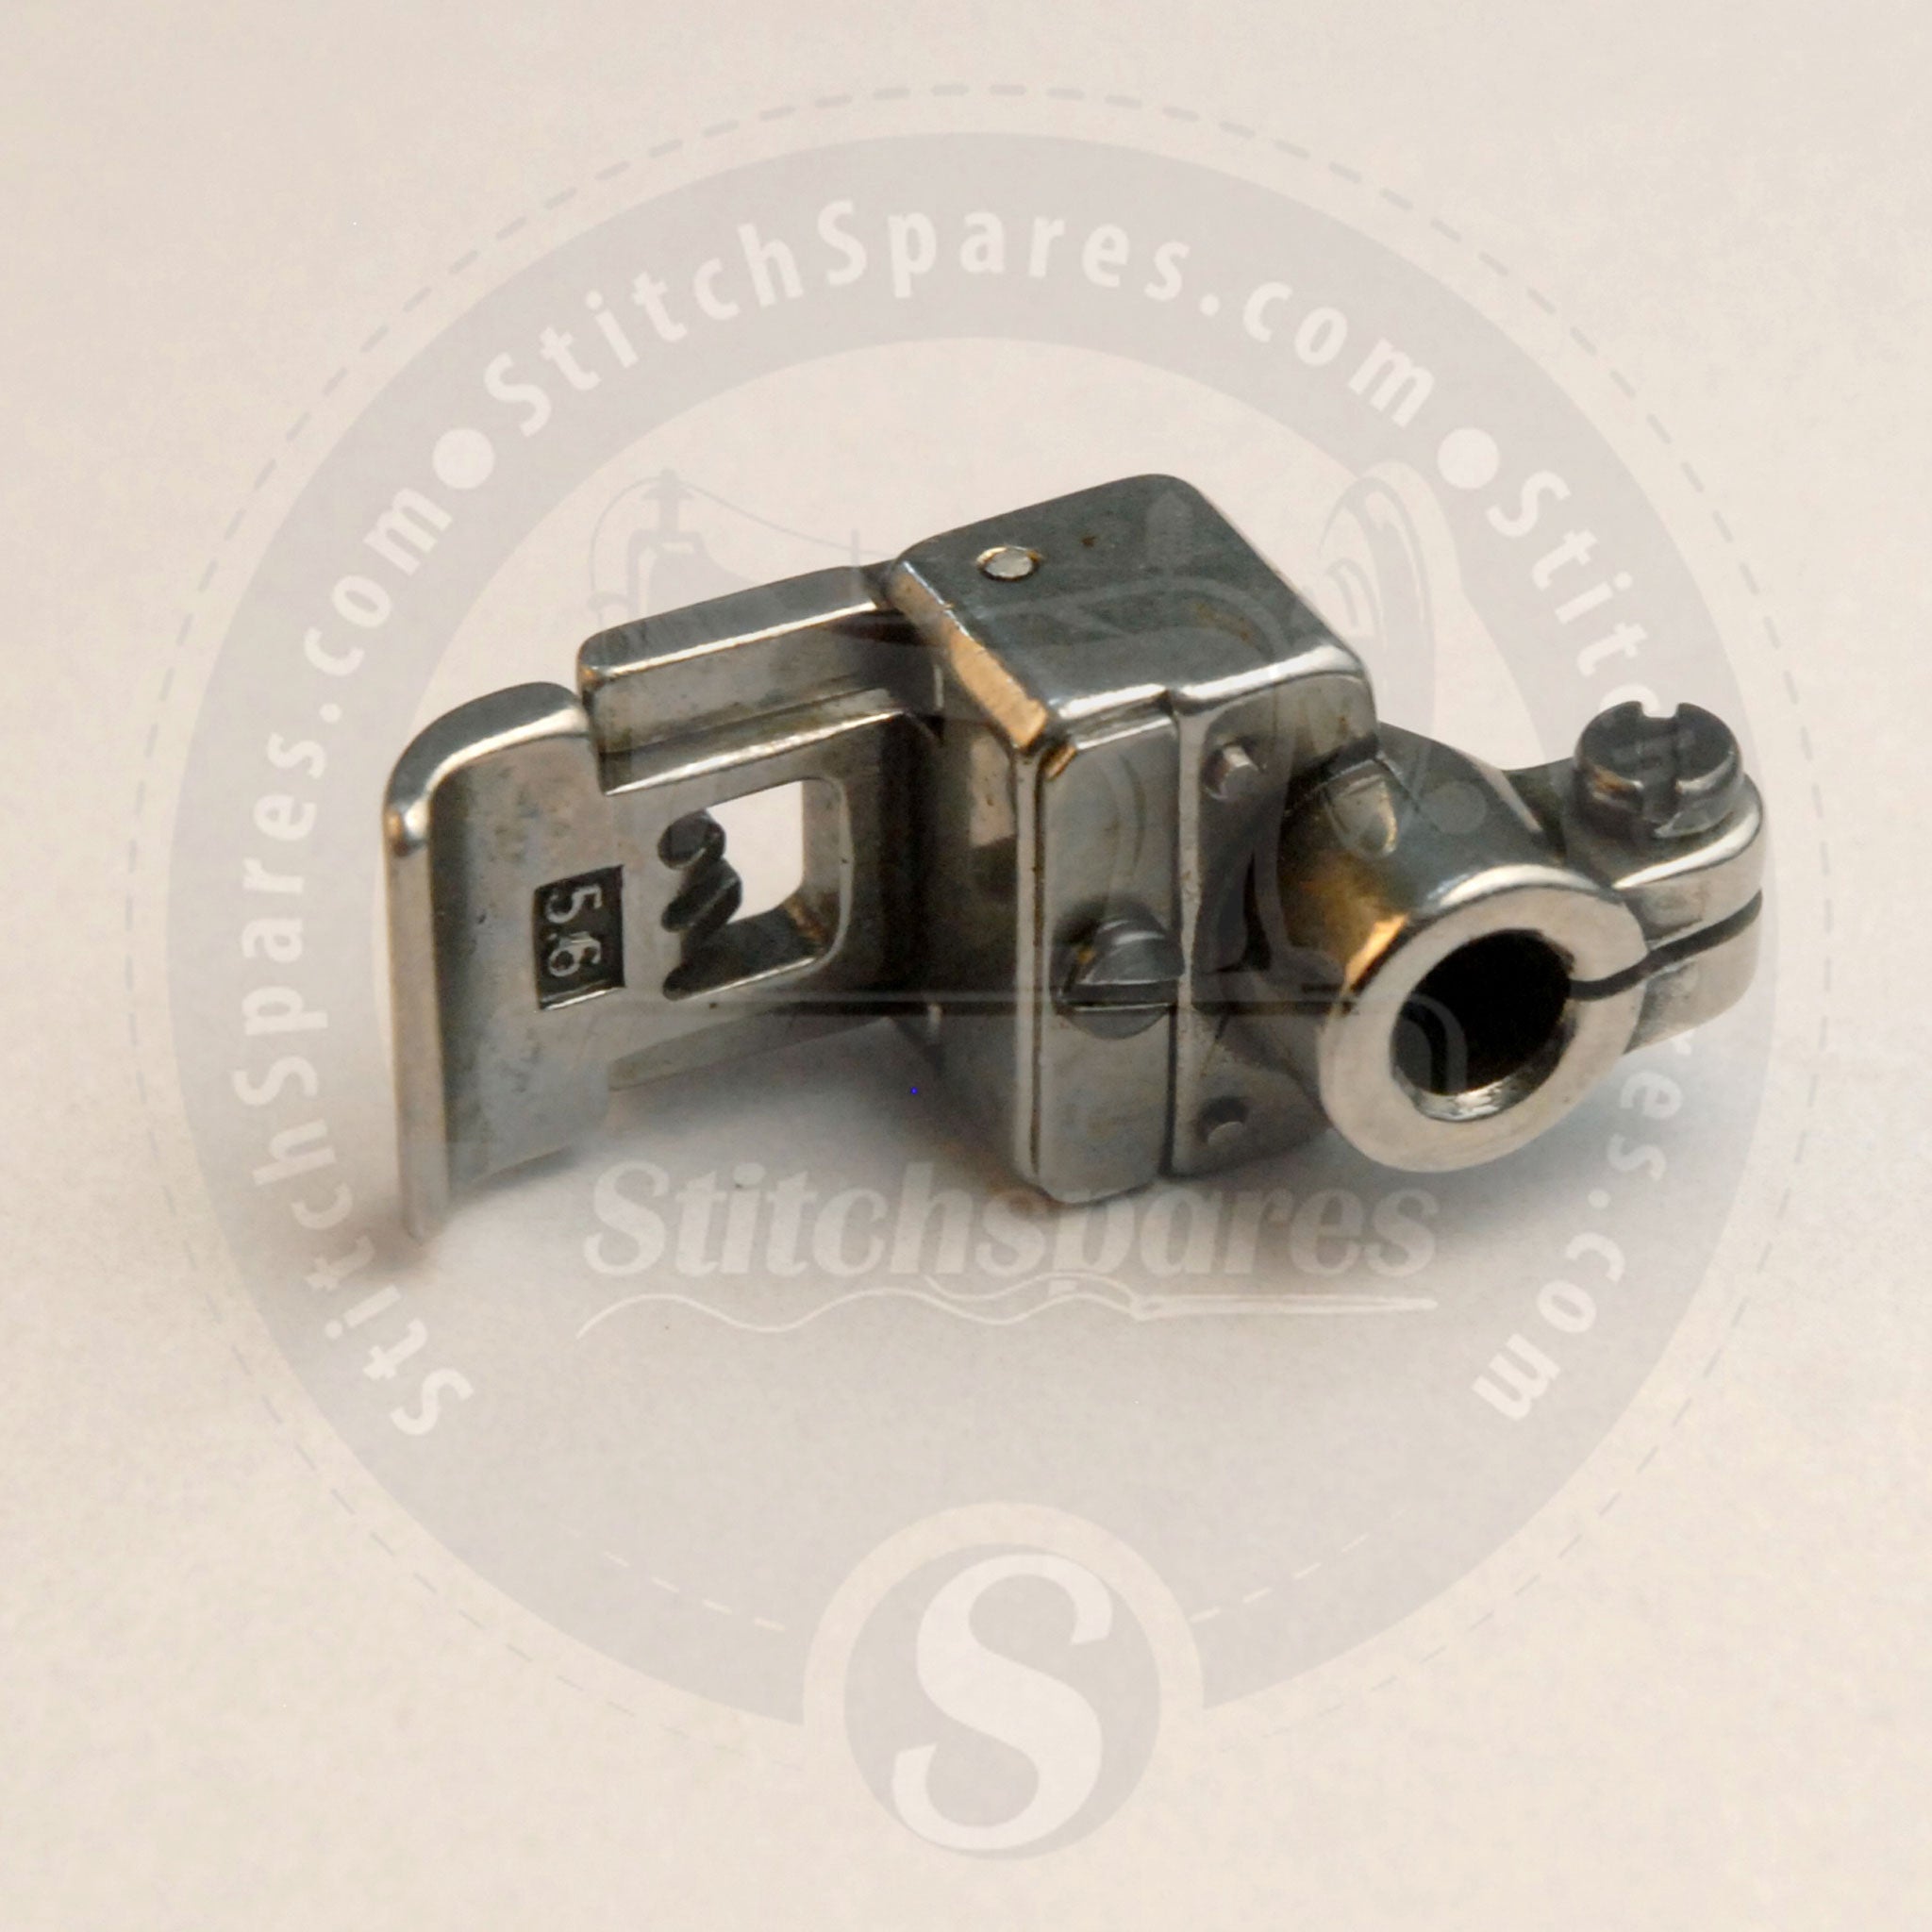 17-8180-1 Nähfuß für Kansai Special Flatlock (Interlock) DVK1703D V7003D DWK1803D W8003D Industrienähmaschine